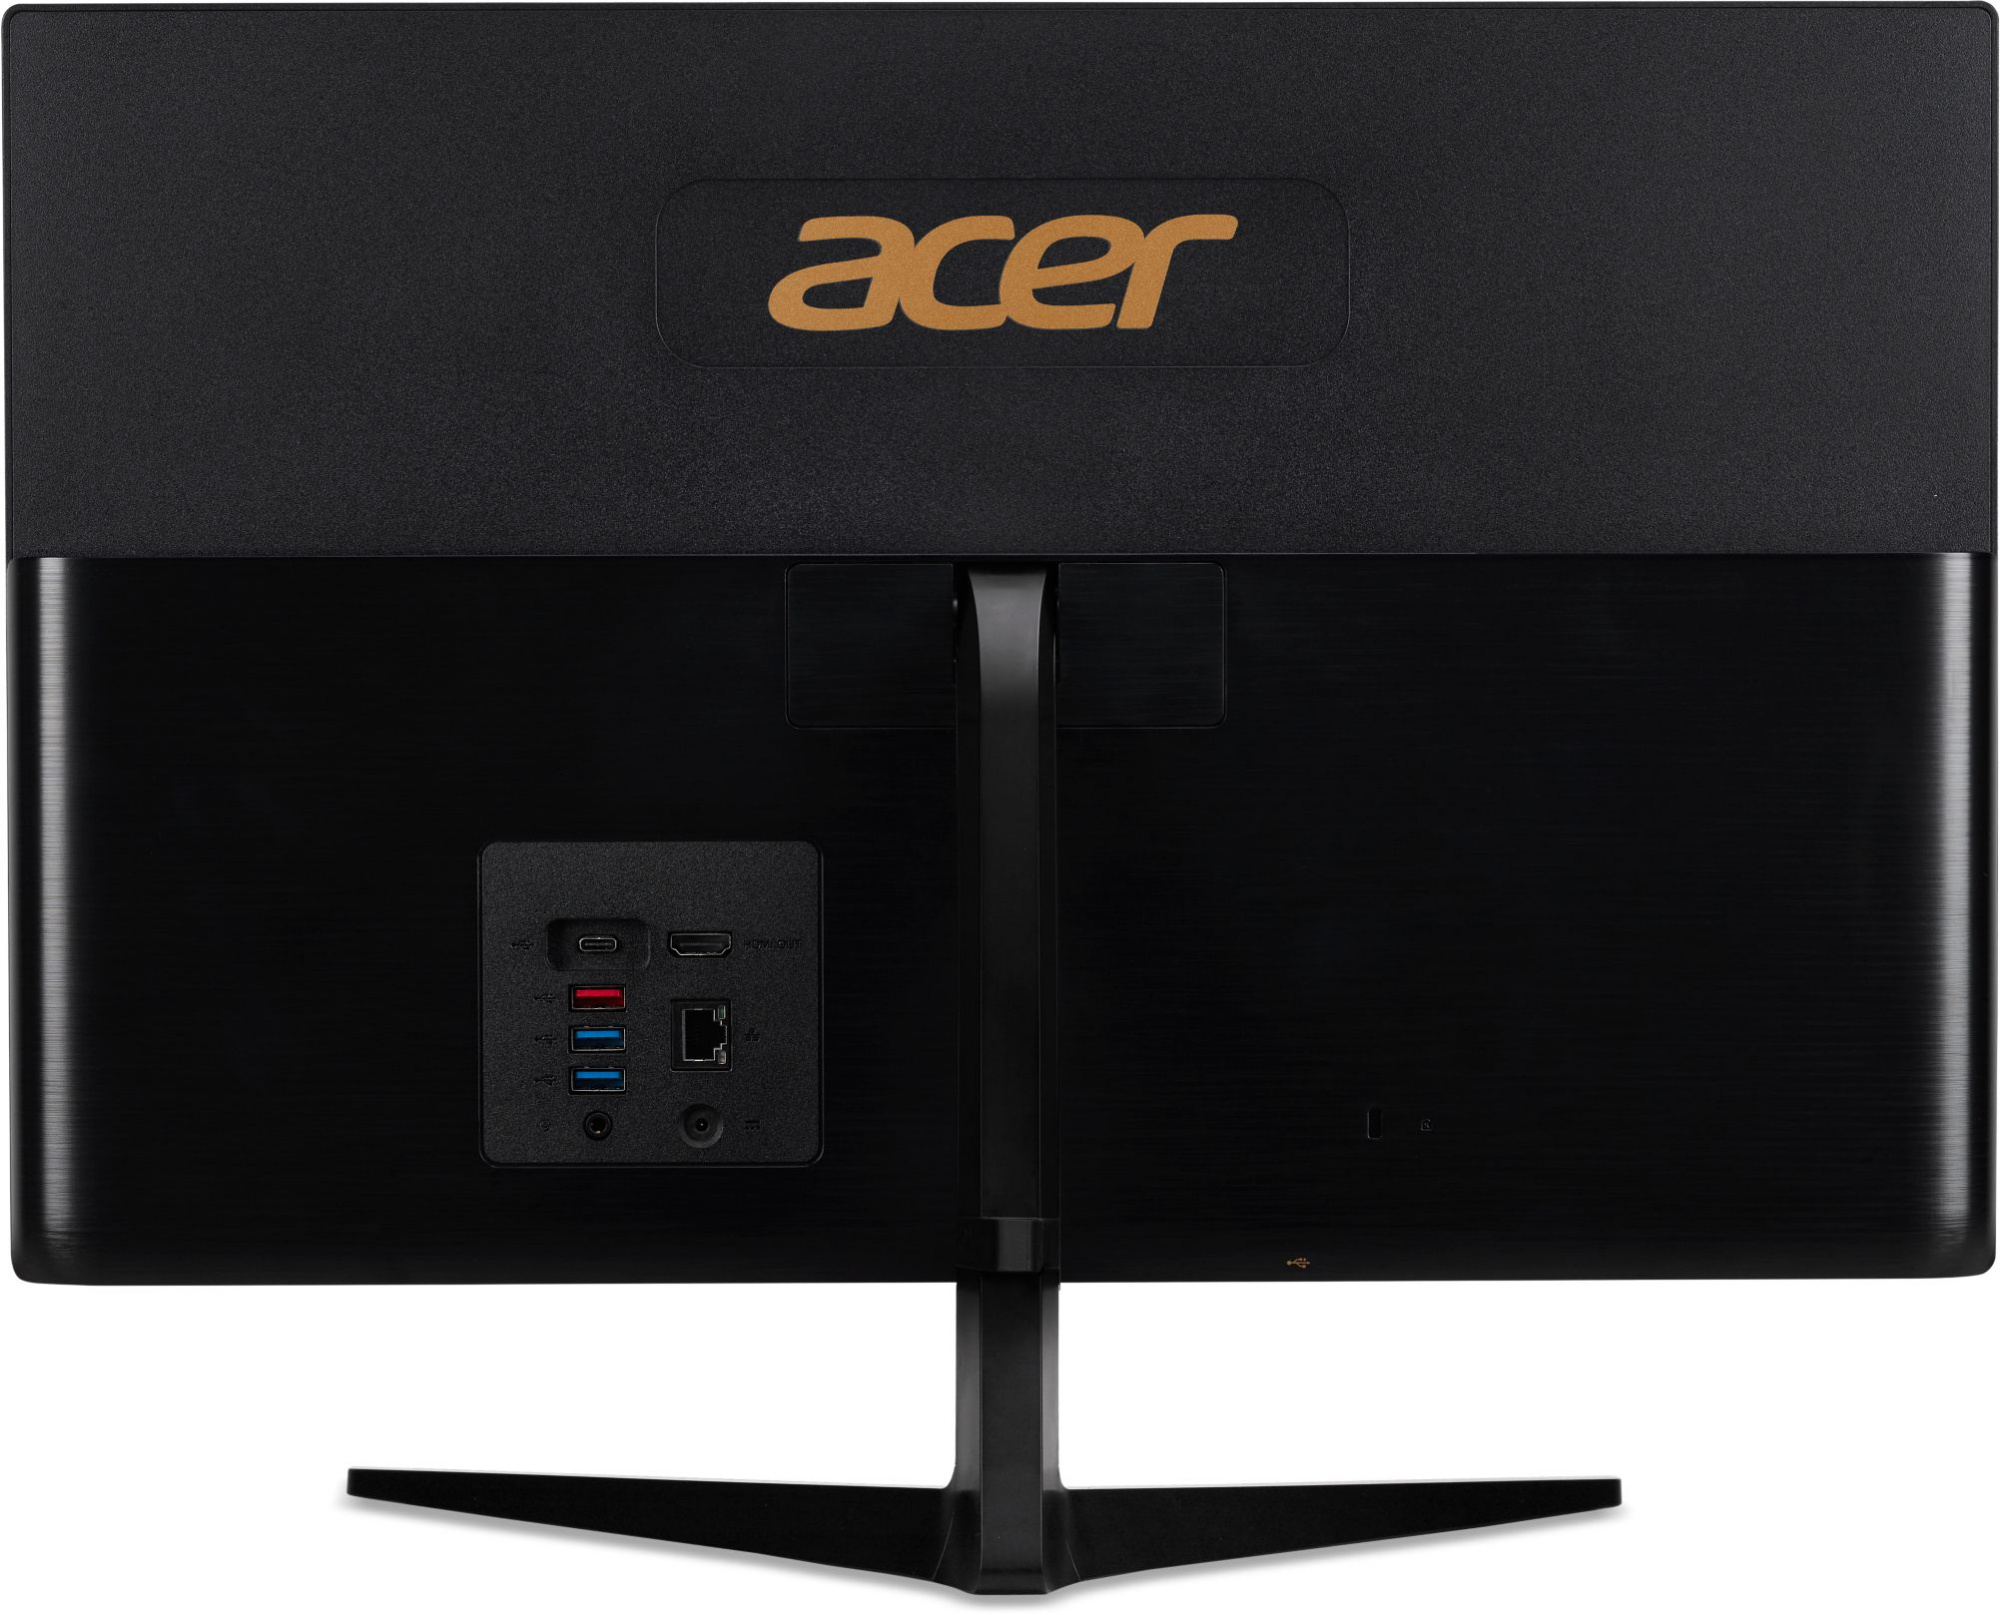 Acer Aspire c24-1700. Aspire c24-1700 DQ.bjwmc.003. Моноблок Acer Aspire c24-1800. Aspire c24-1700 DQ.bjwmc.002. C27 1800